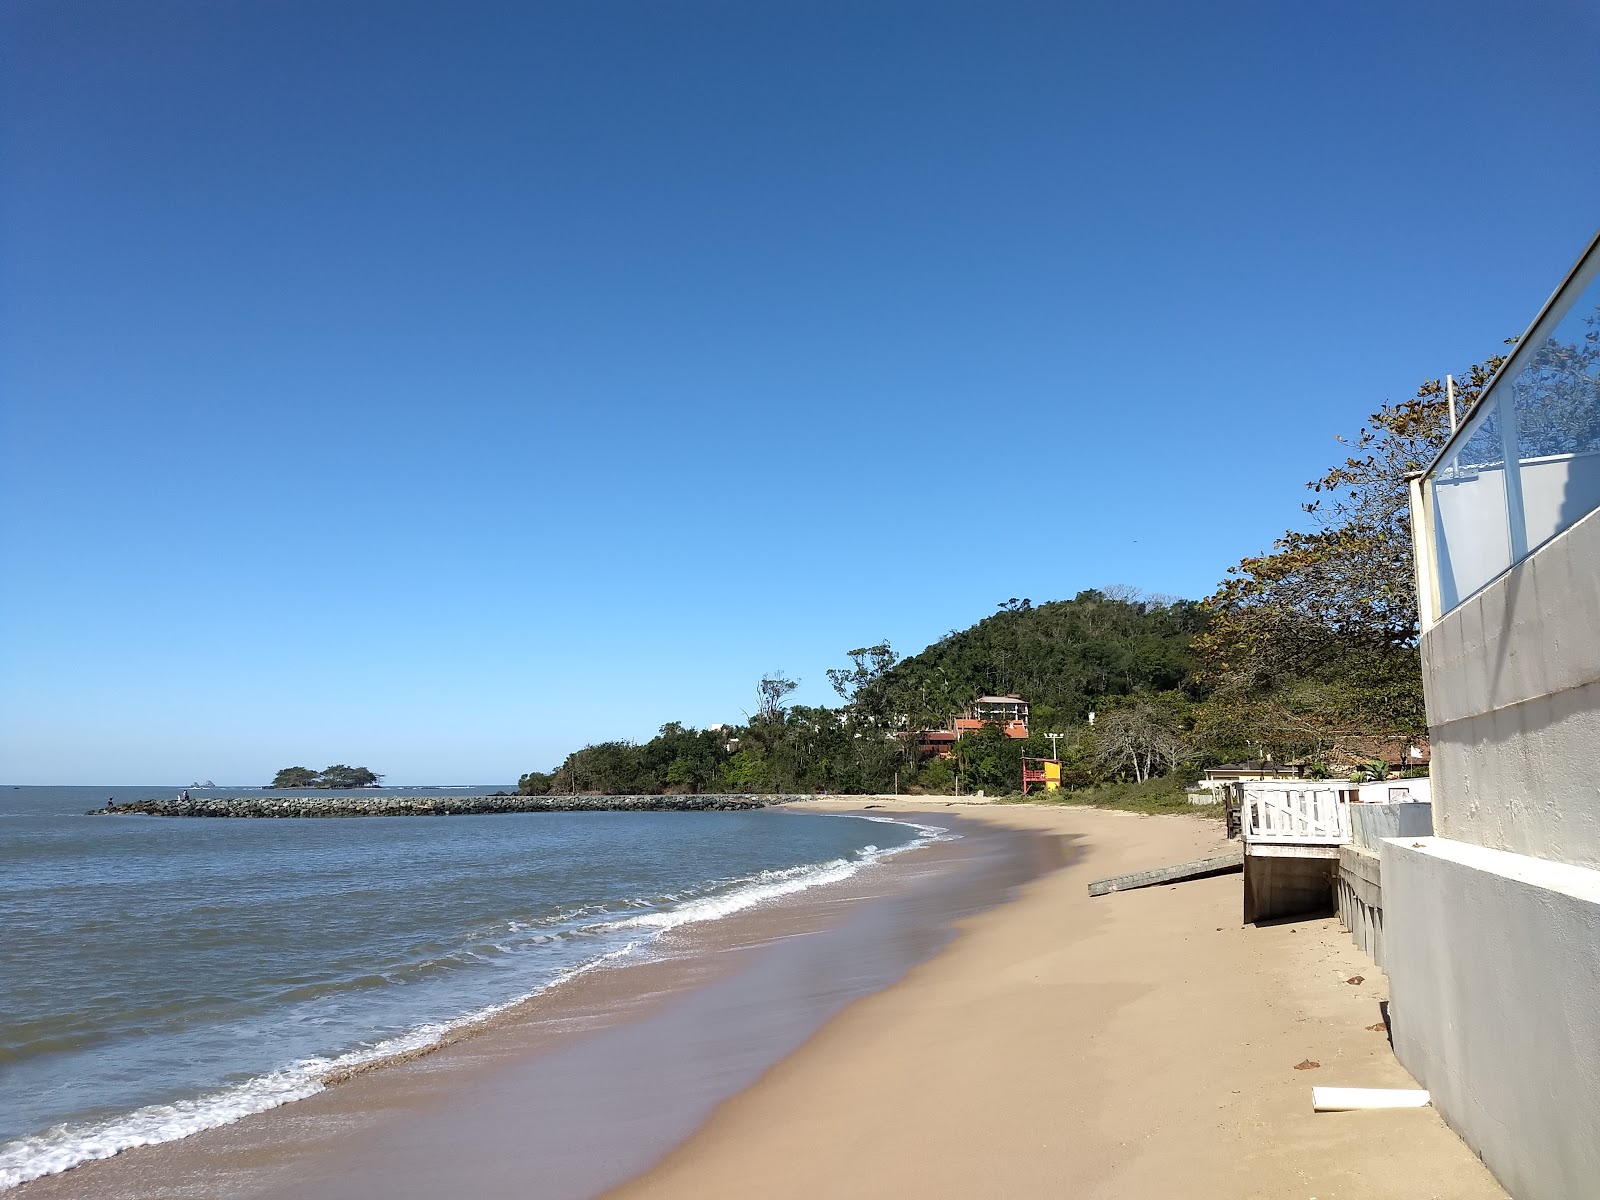 Foto de Praia de Itajuba - lugar popular entre os apreciadores de relaxamento